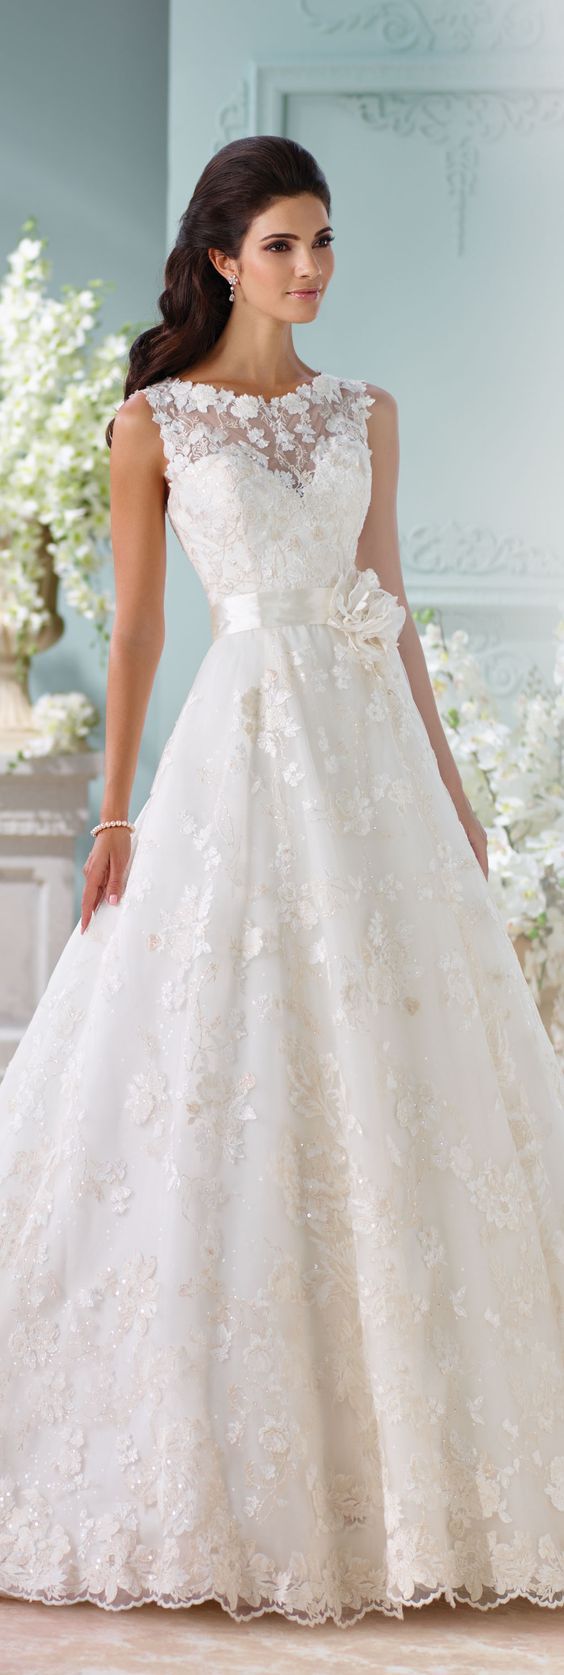 Wedding - Wedding Dress With Lace Back